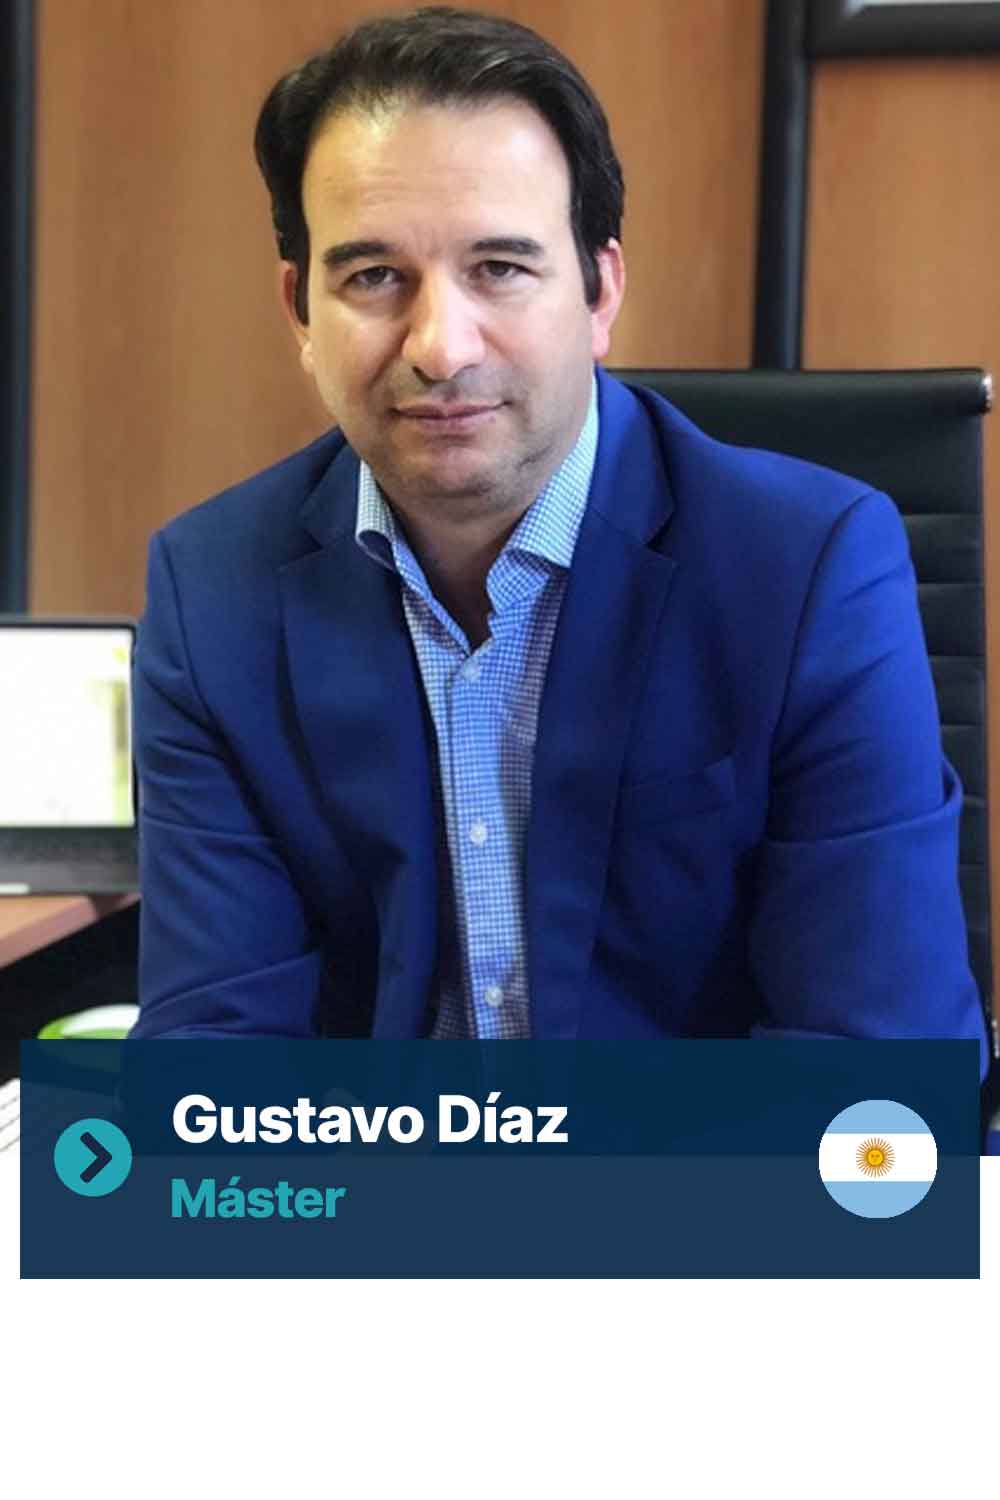 Gustavo Diaz